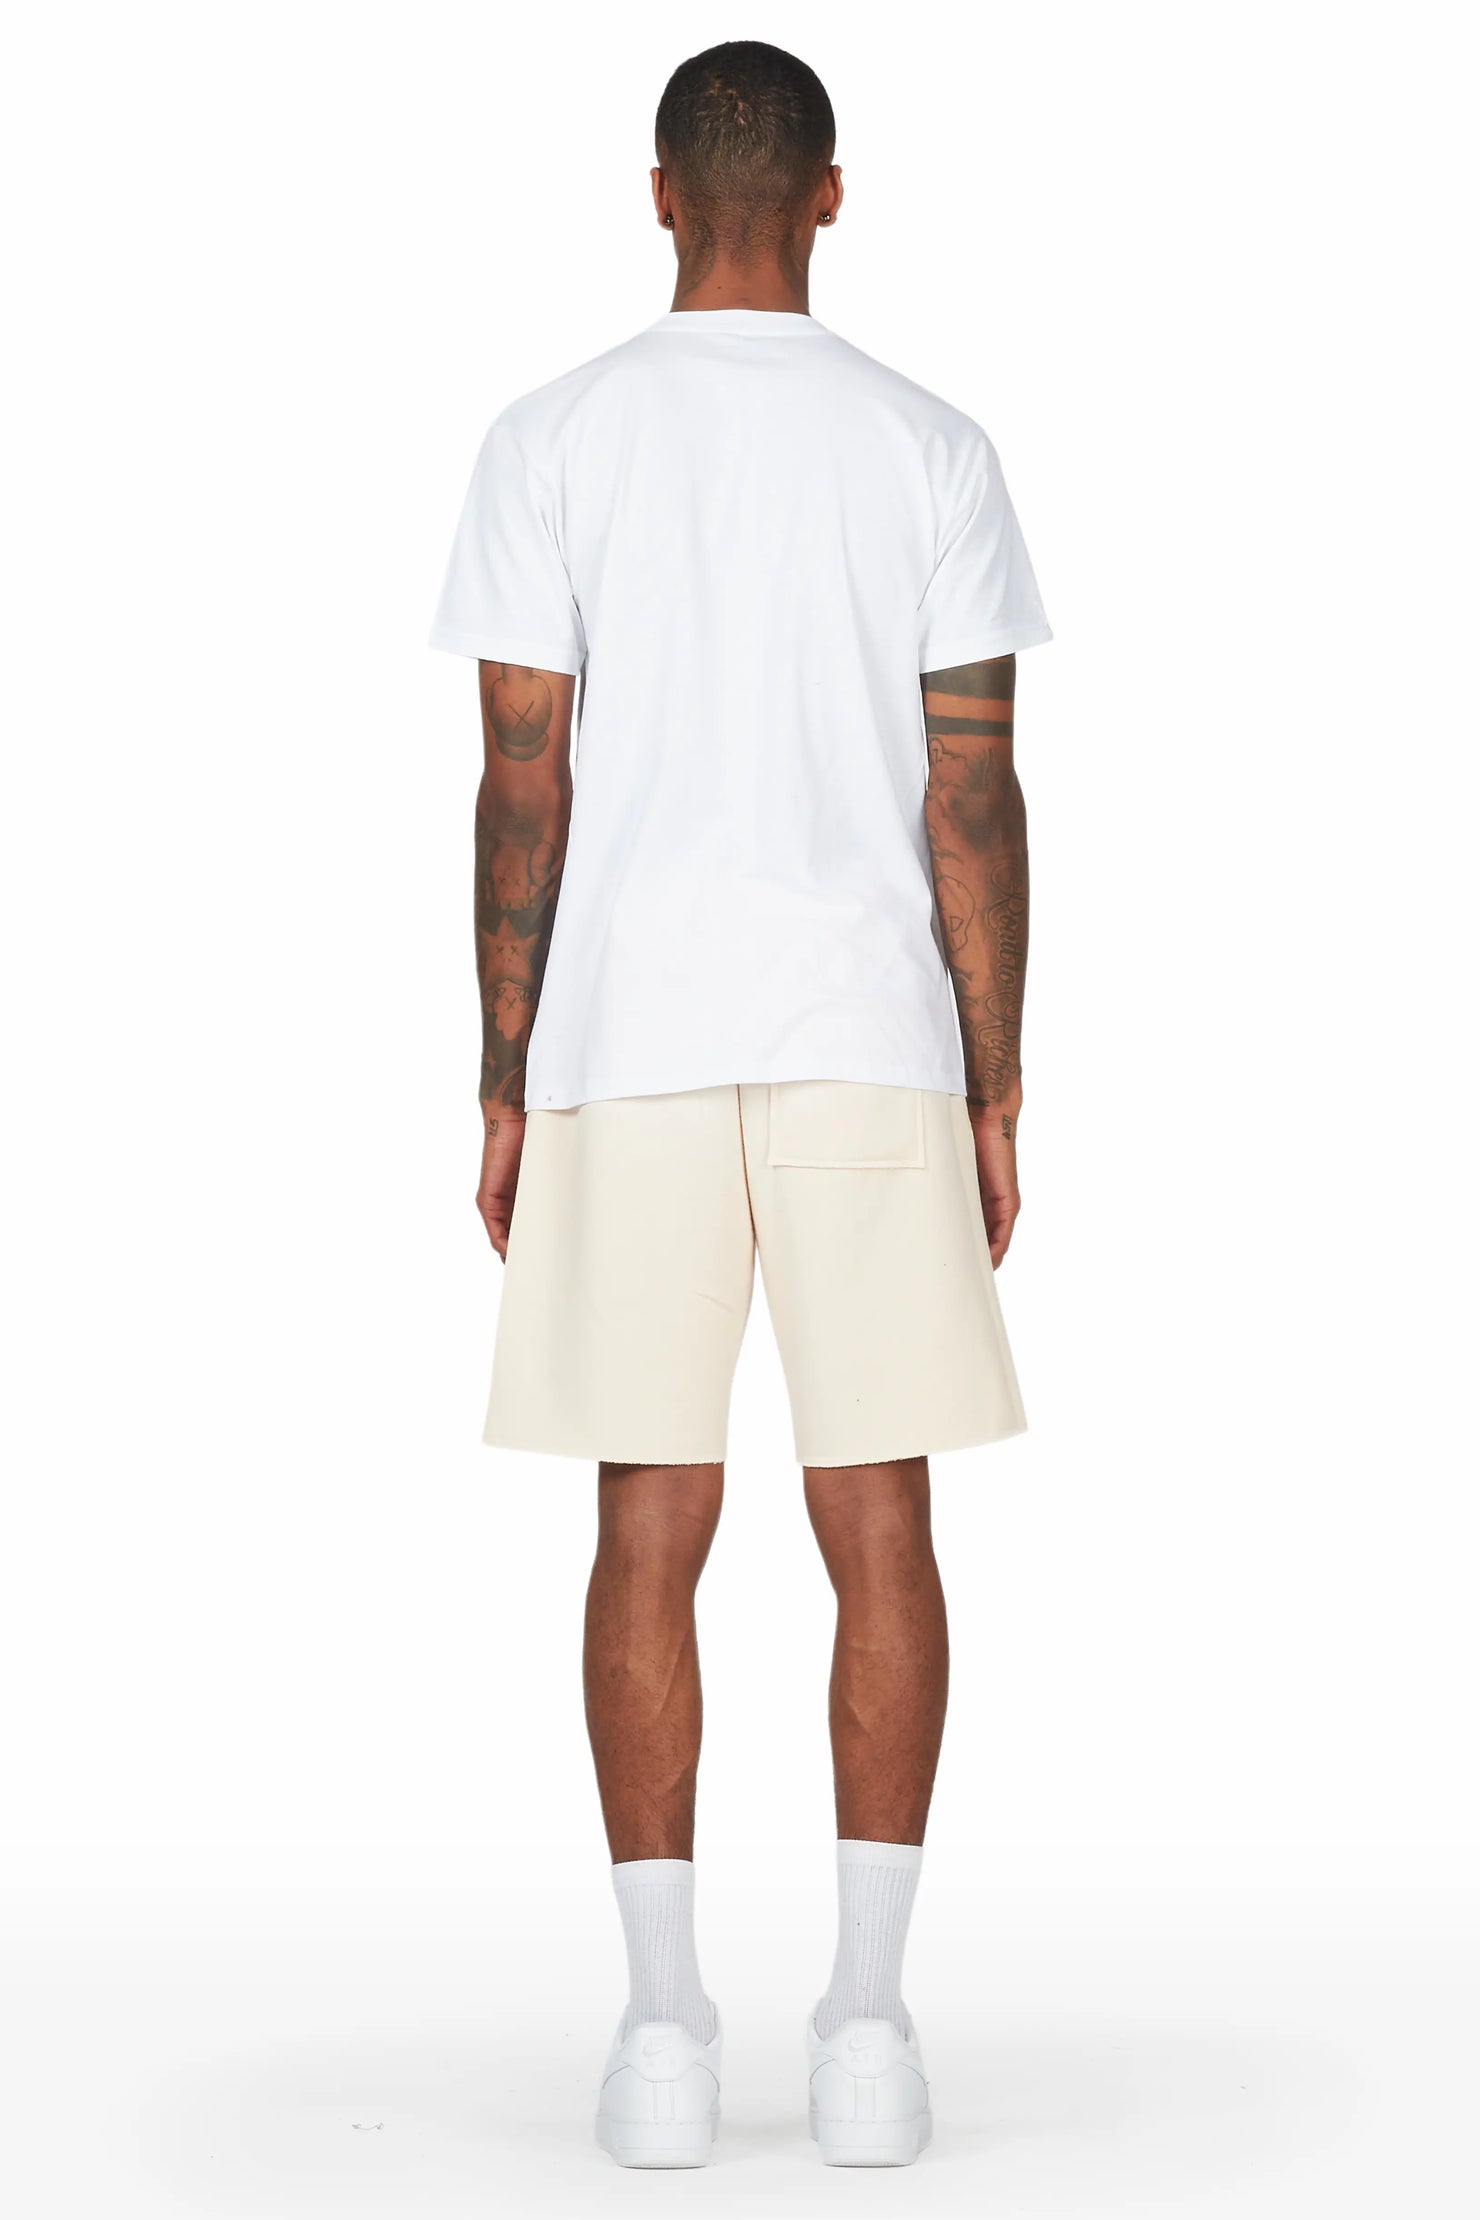 Rockstar Art Dist. White/Beige T-Shirt Short Set